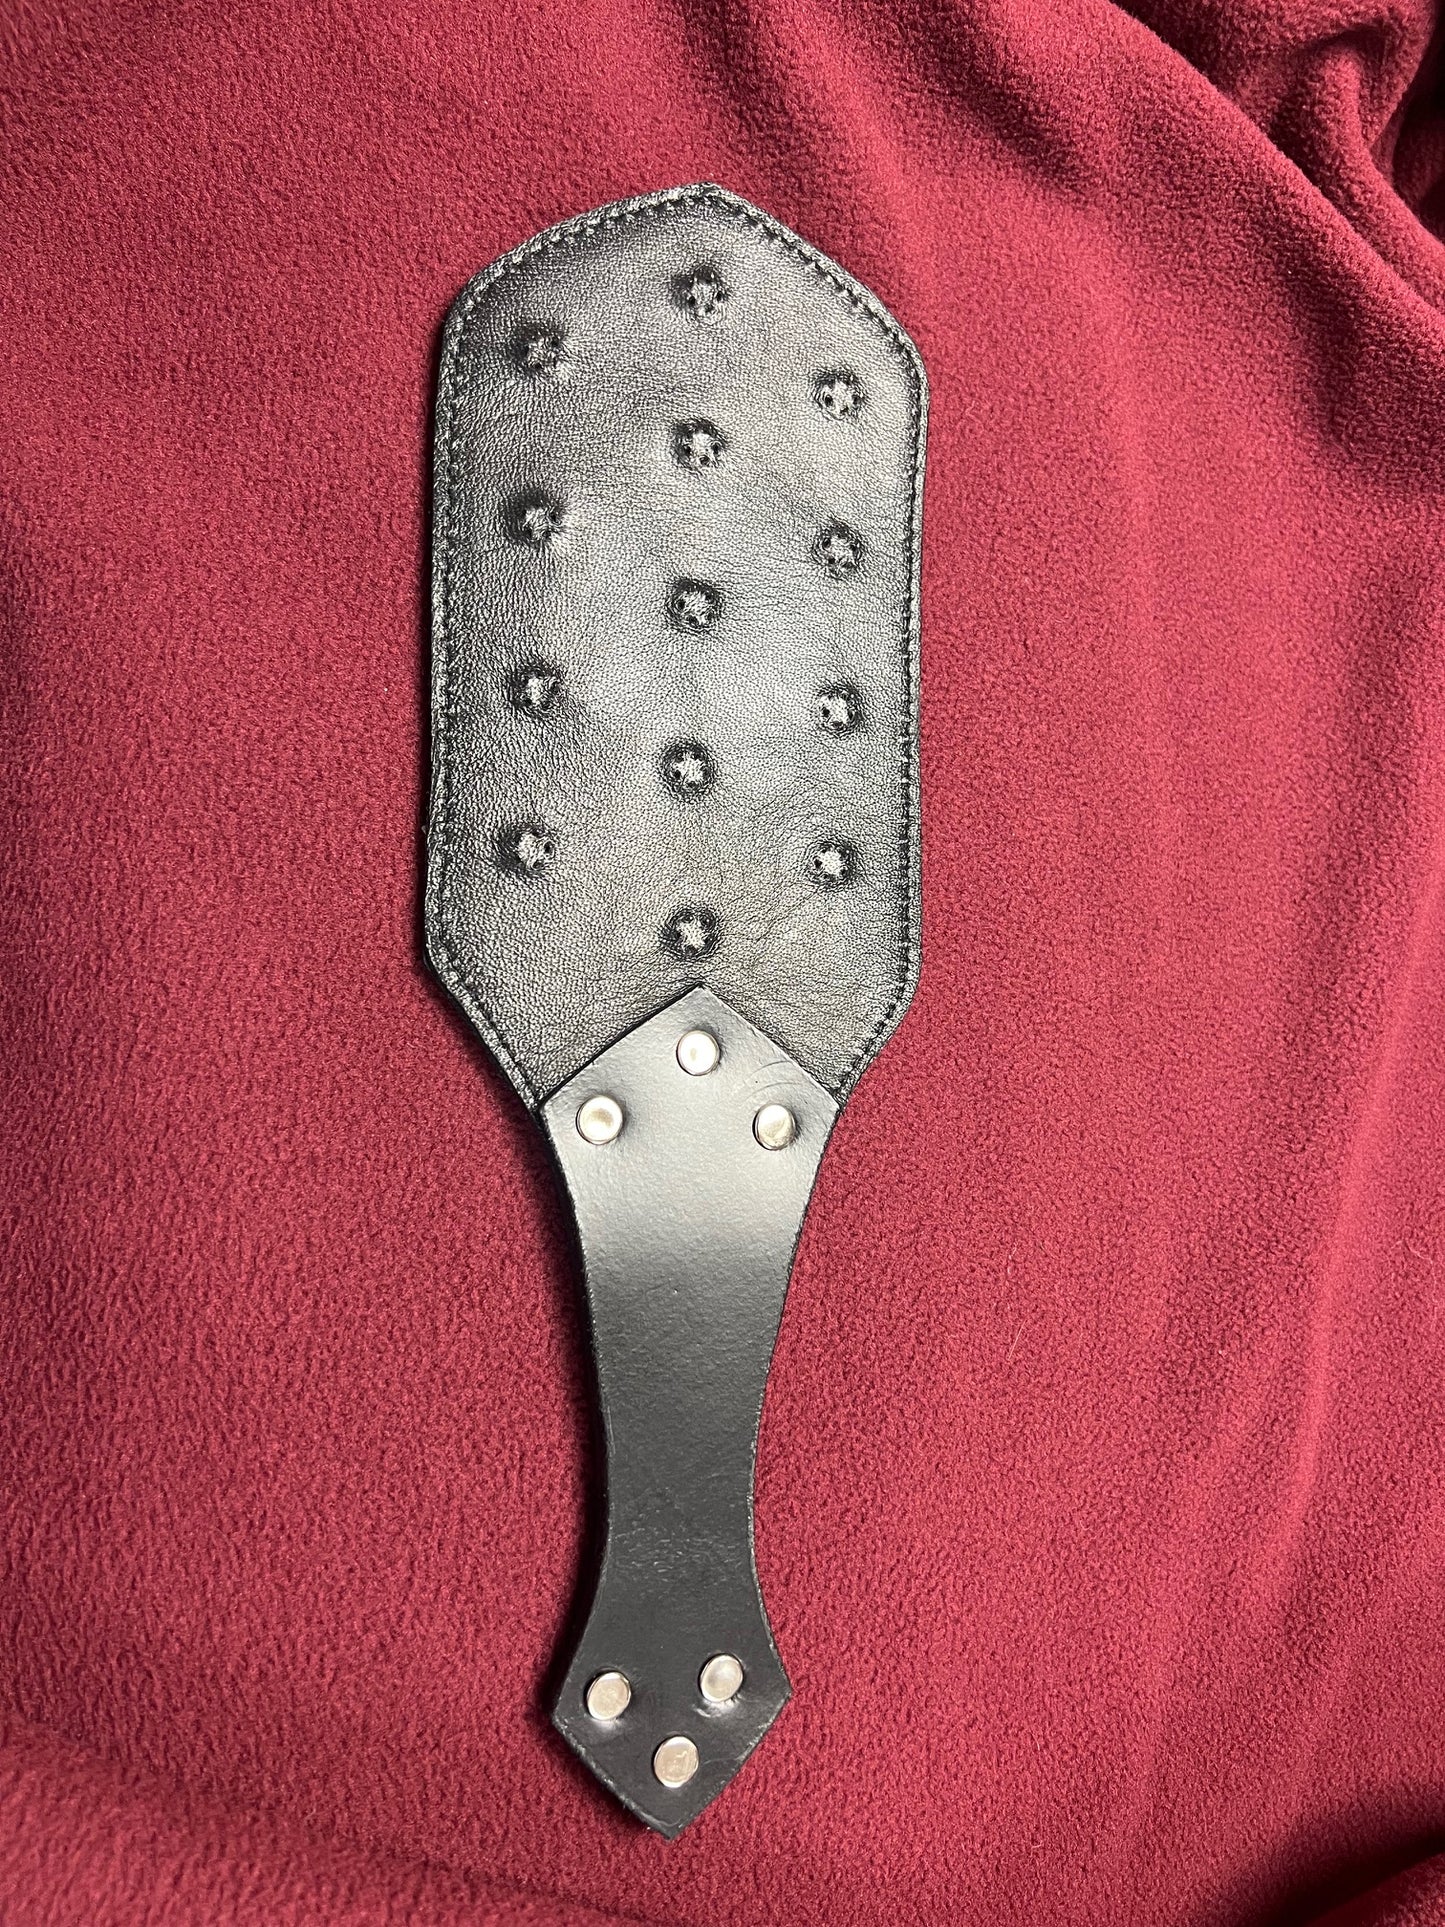 BDSM Kink Paddle-studded version real Leather